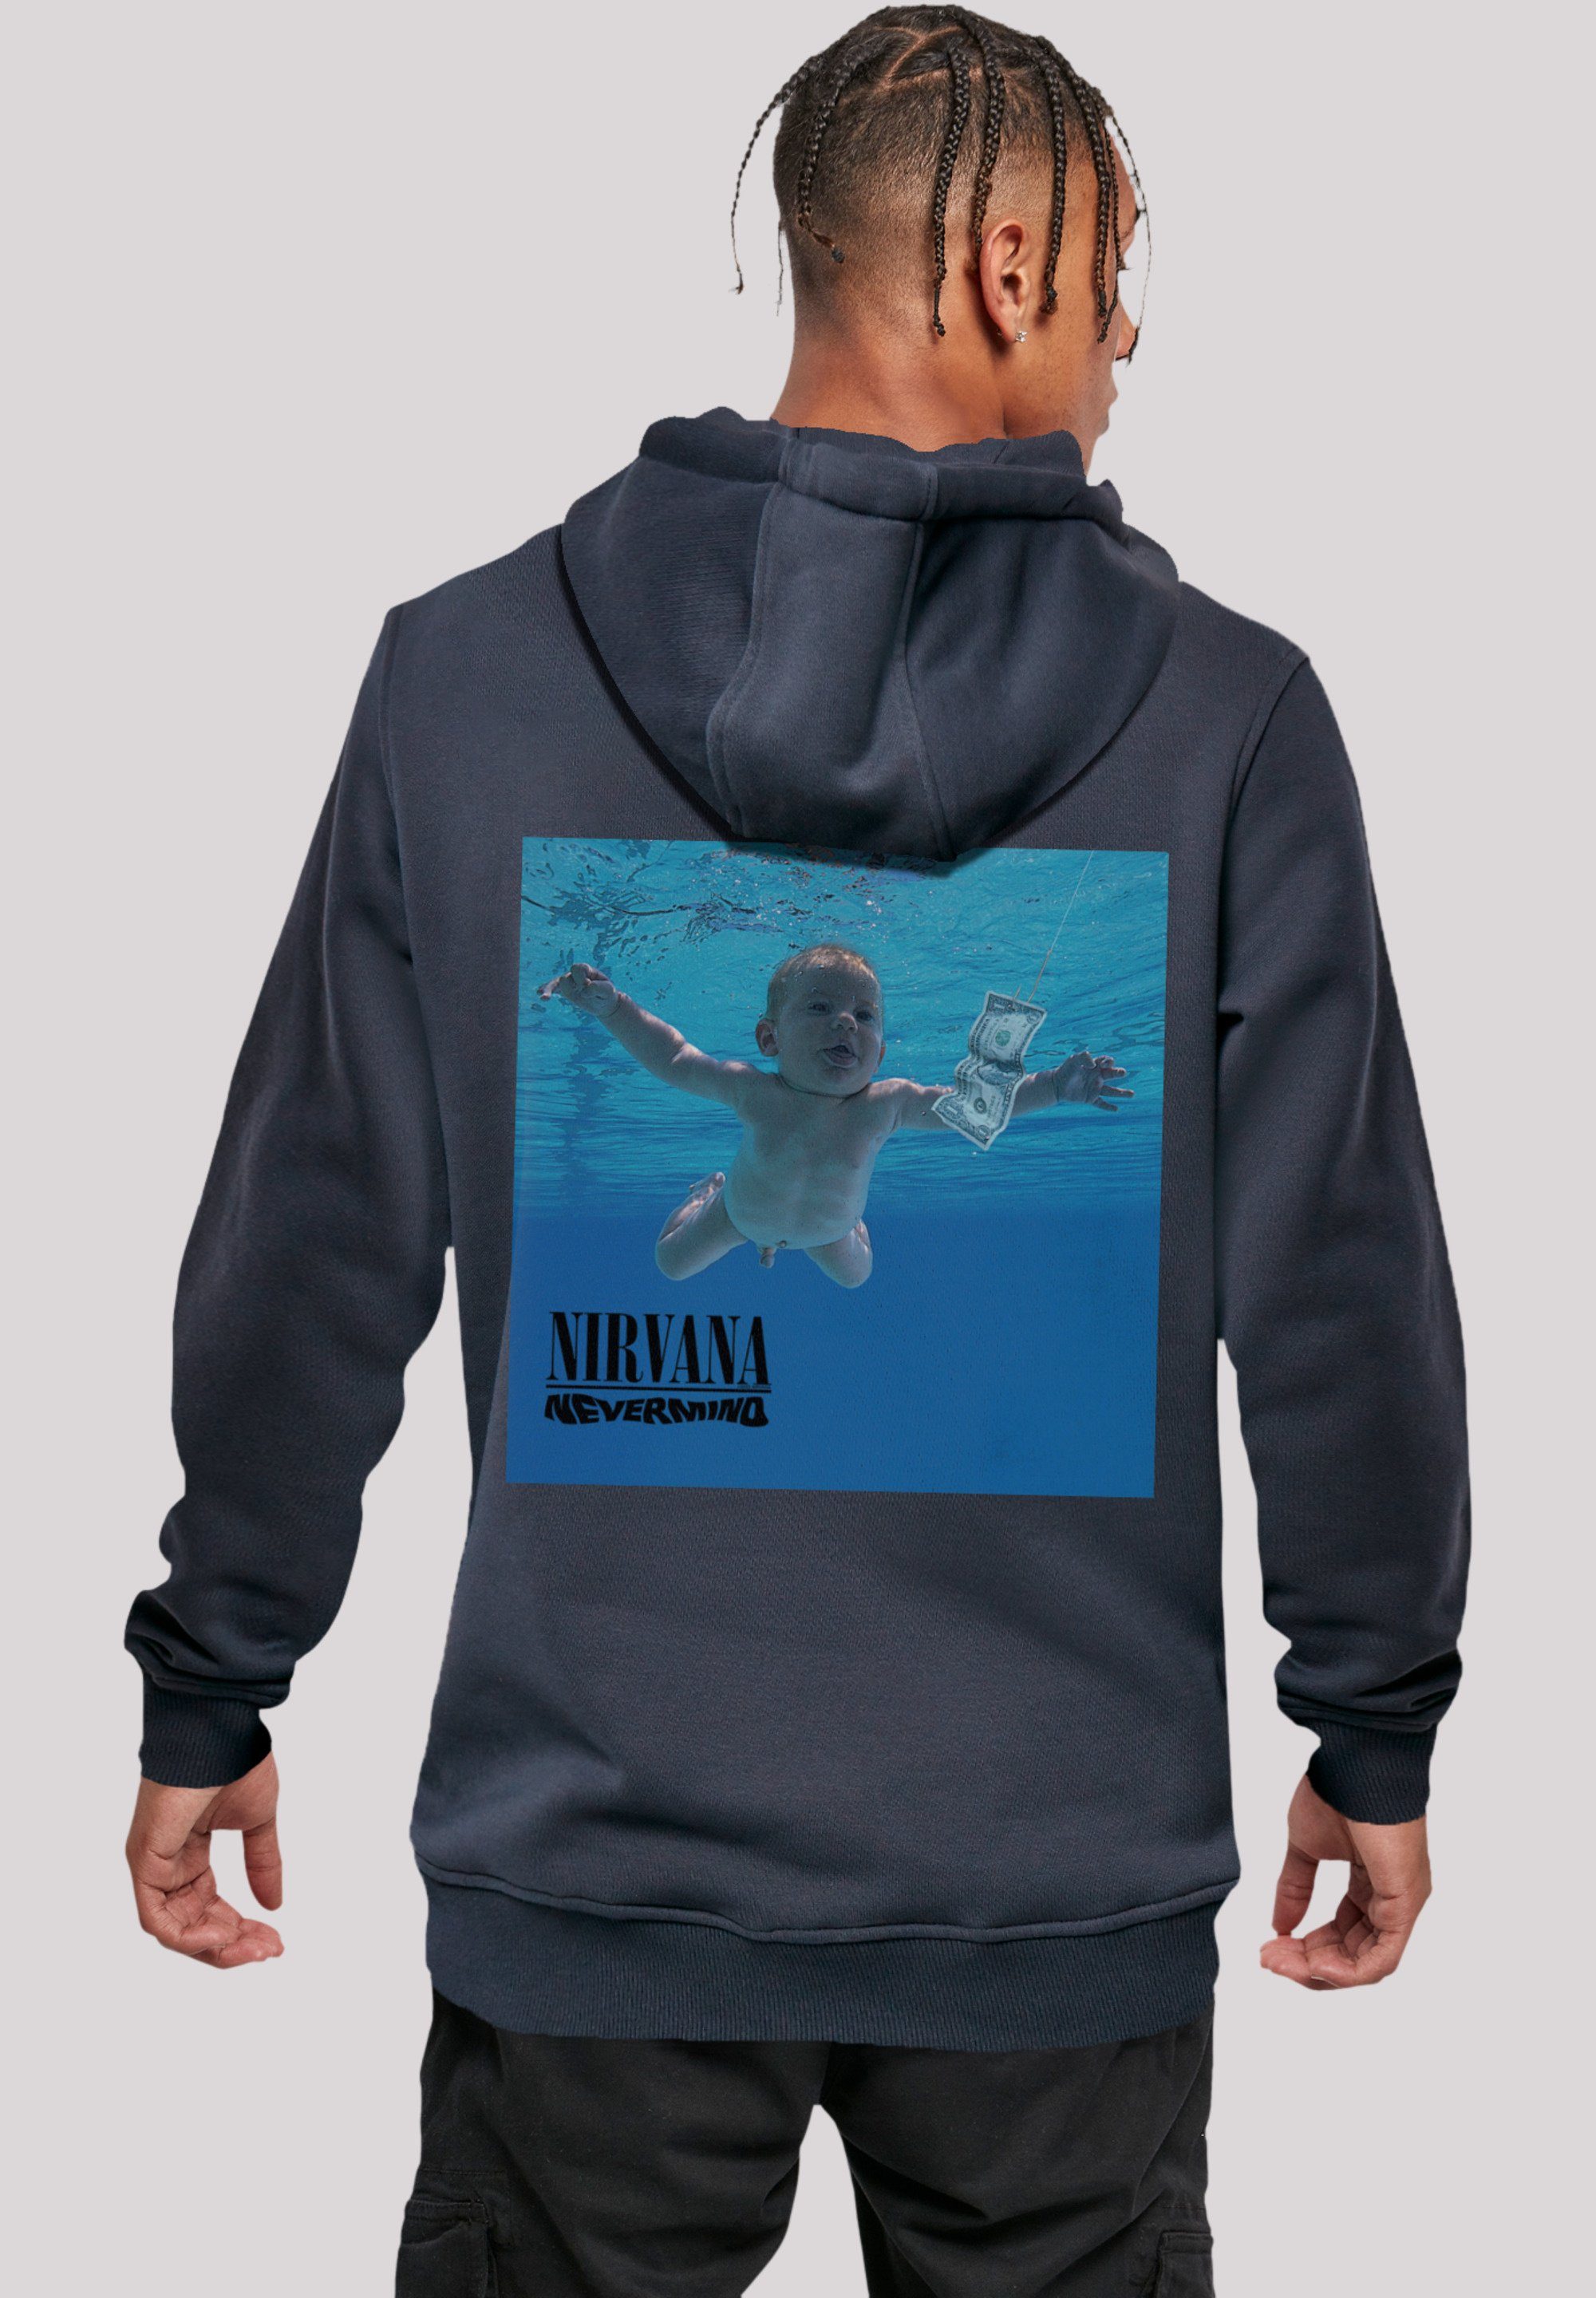 F4NT4STIC Kapuzenpullover Qualität Premium Nevermind Rock Nirvana navy Album Band